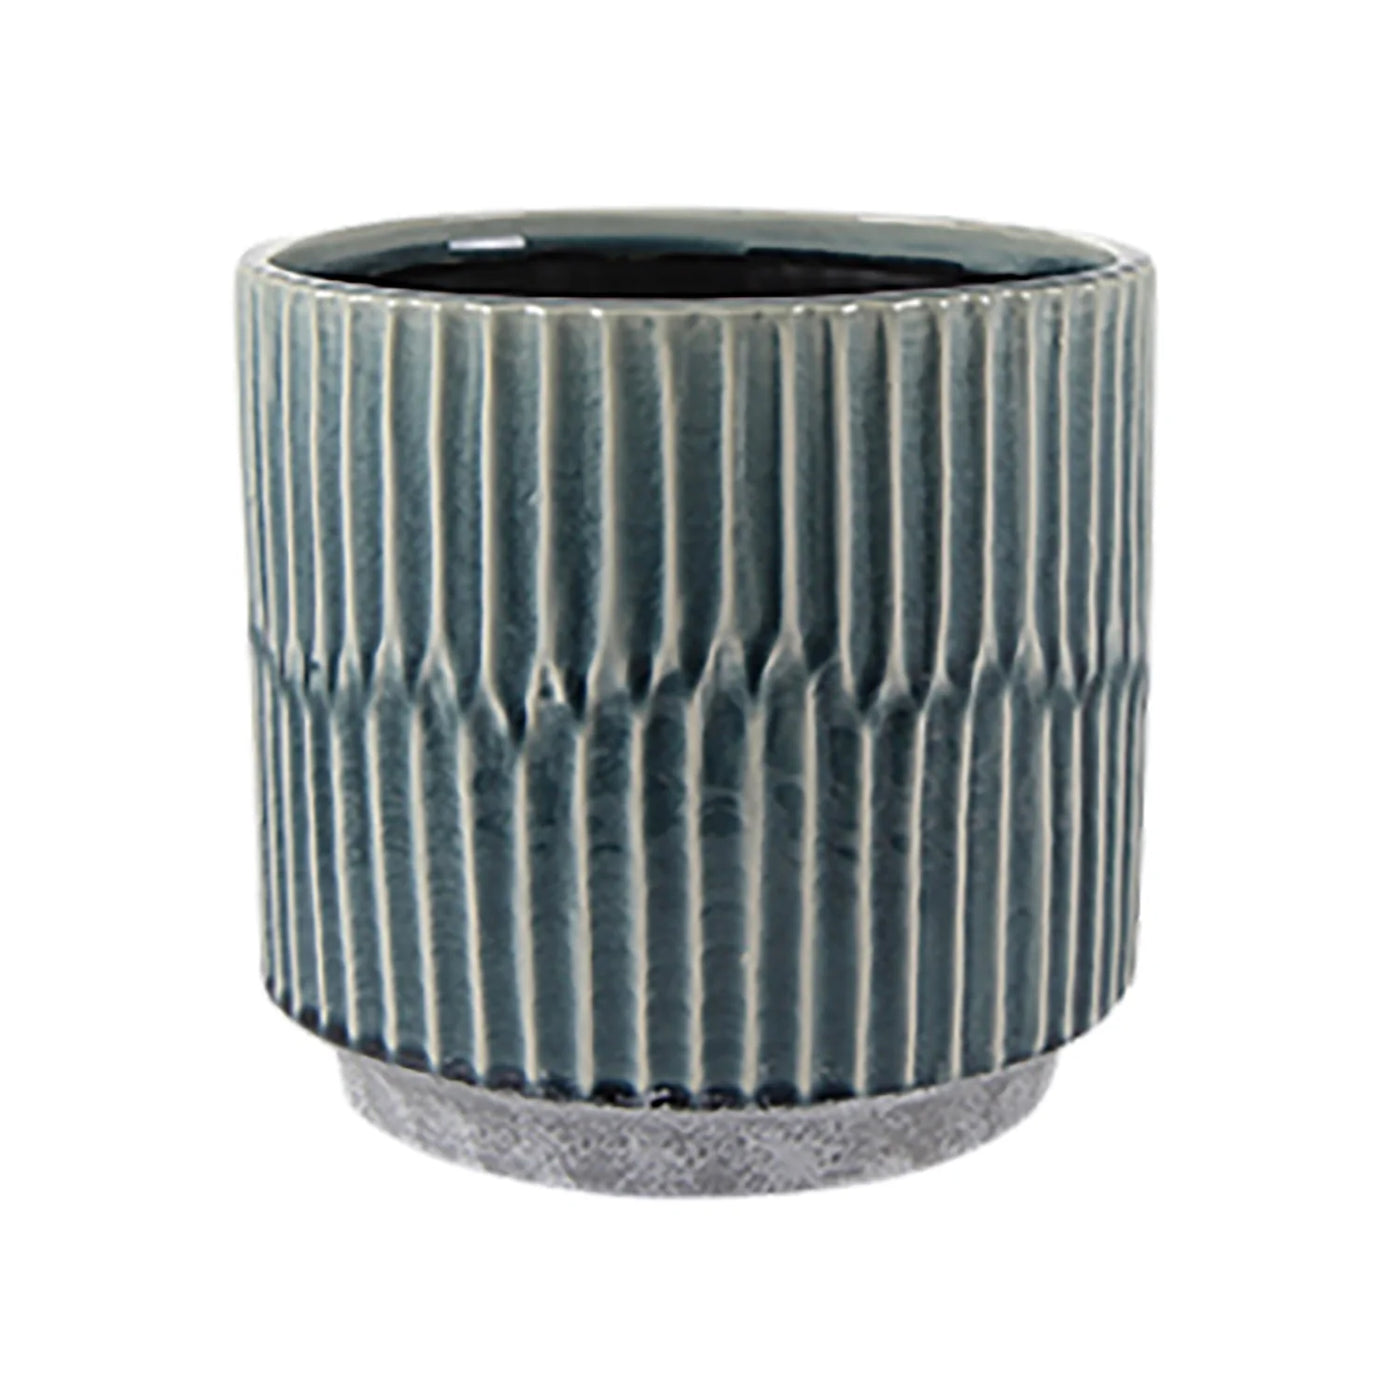 Premium Plant Pot | Onno Denim Ceramic Glaze Planter | 16cm Plant Pot